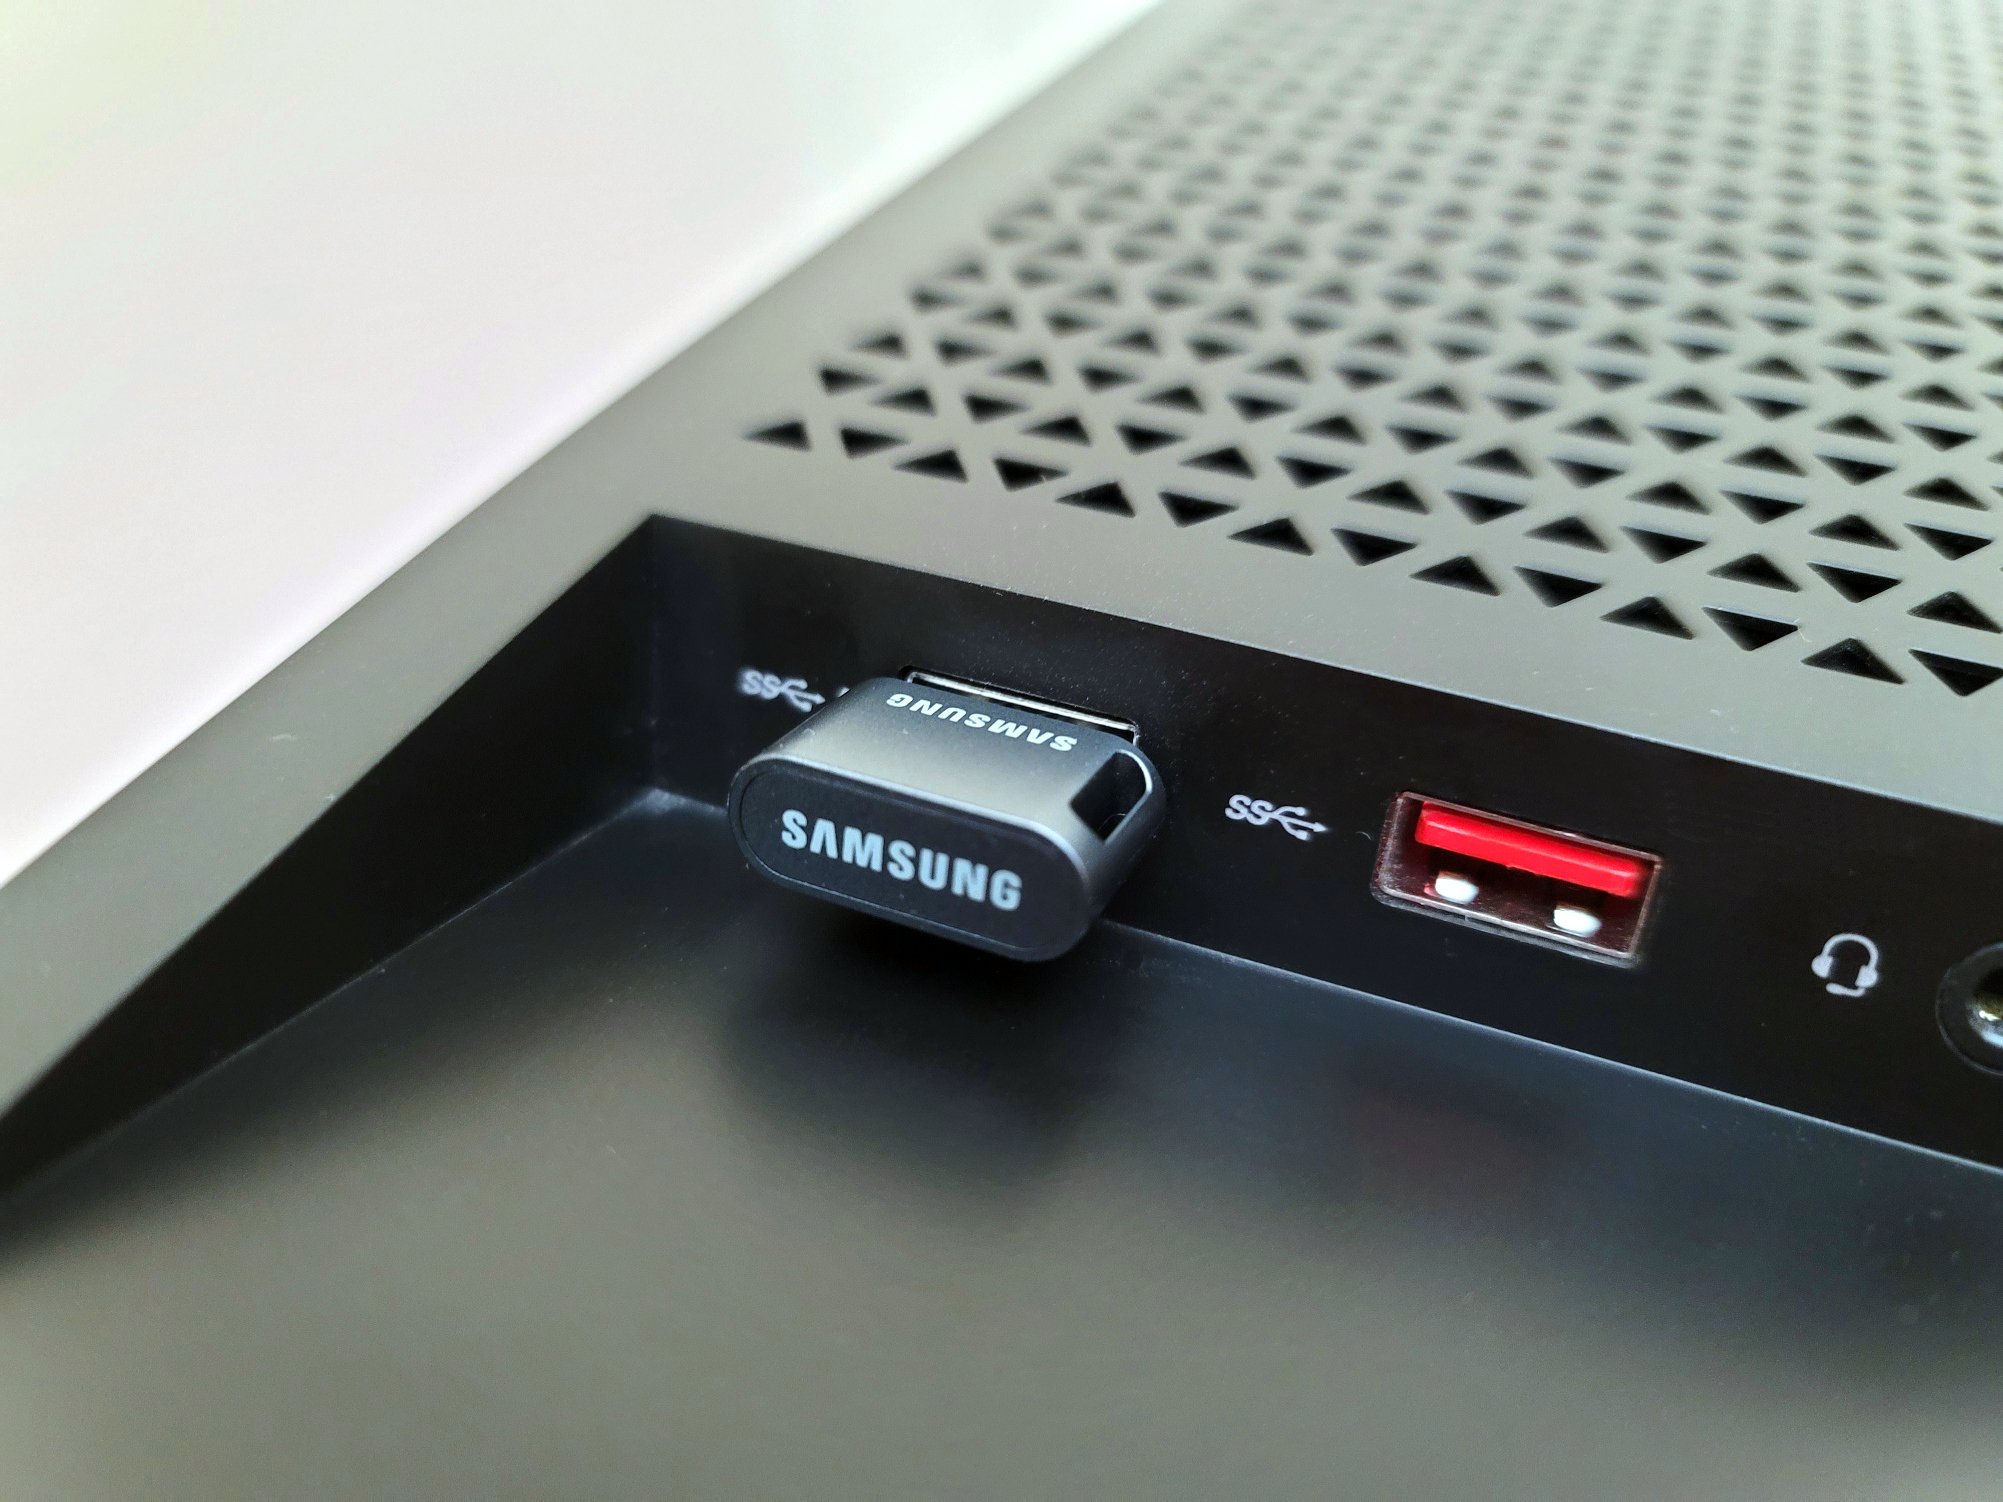 Samsung Fit Plus Usb Flash Drive Inserted Close